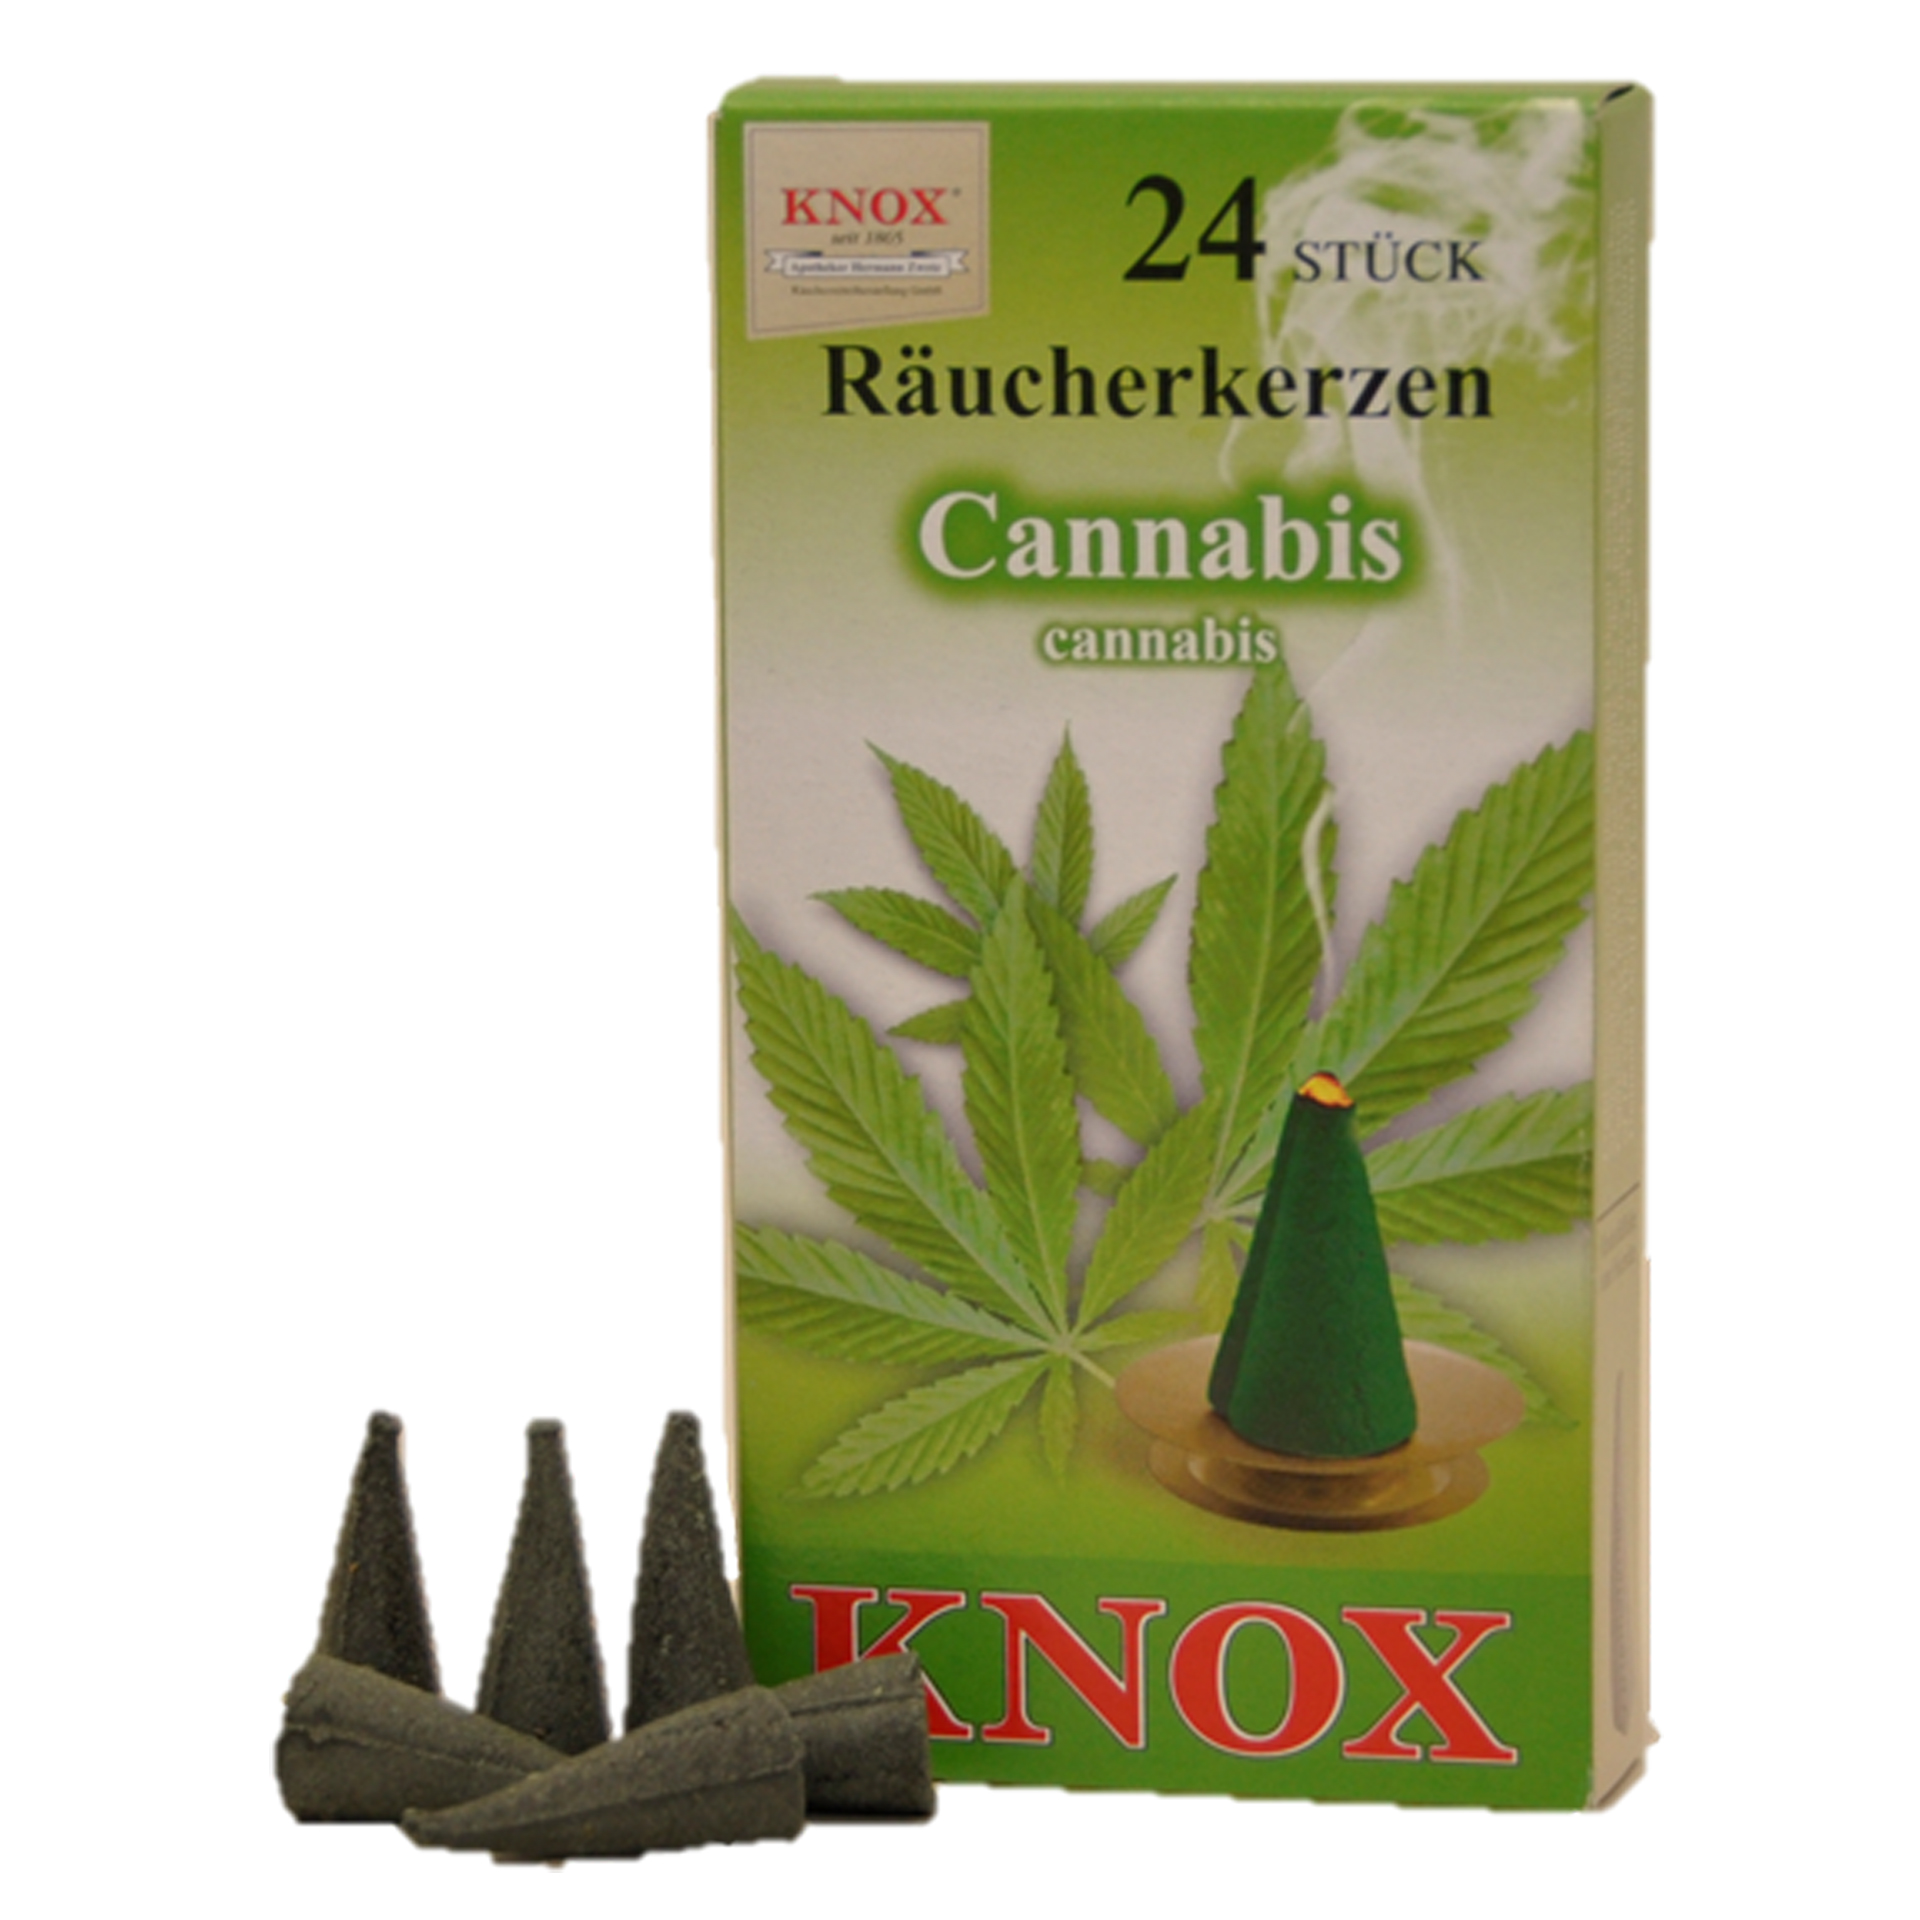 Knox Räucherkerzen Cannabis 